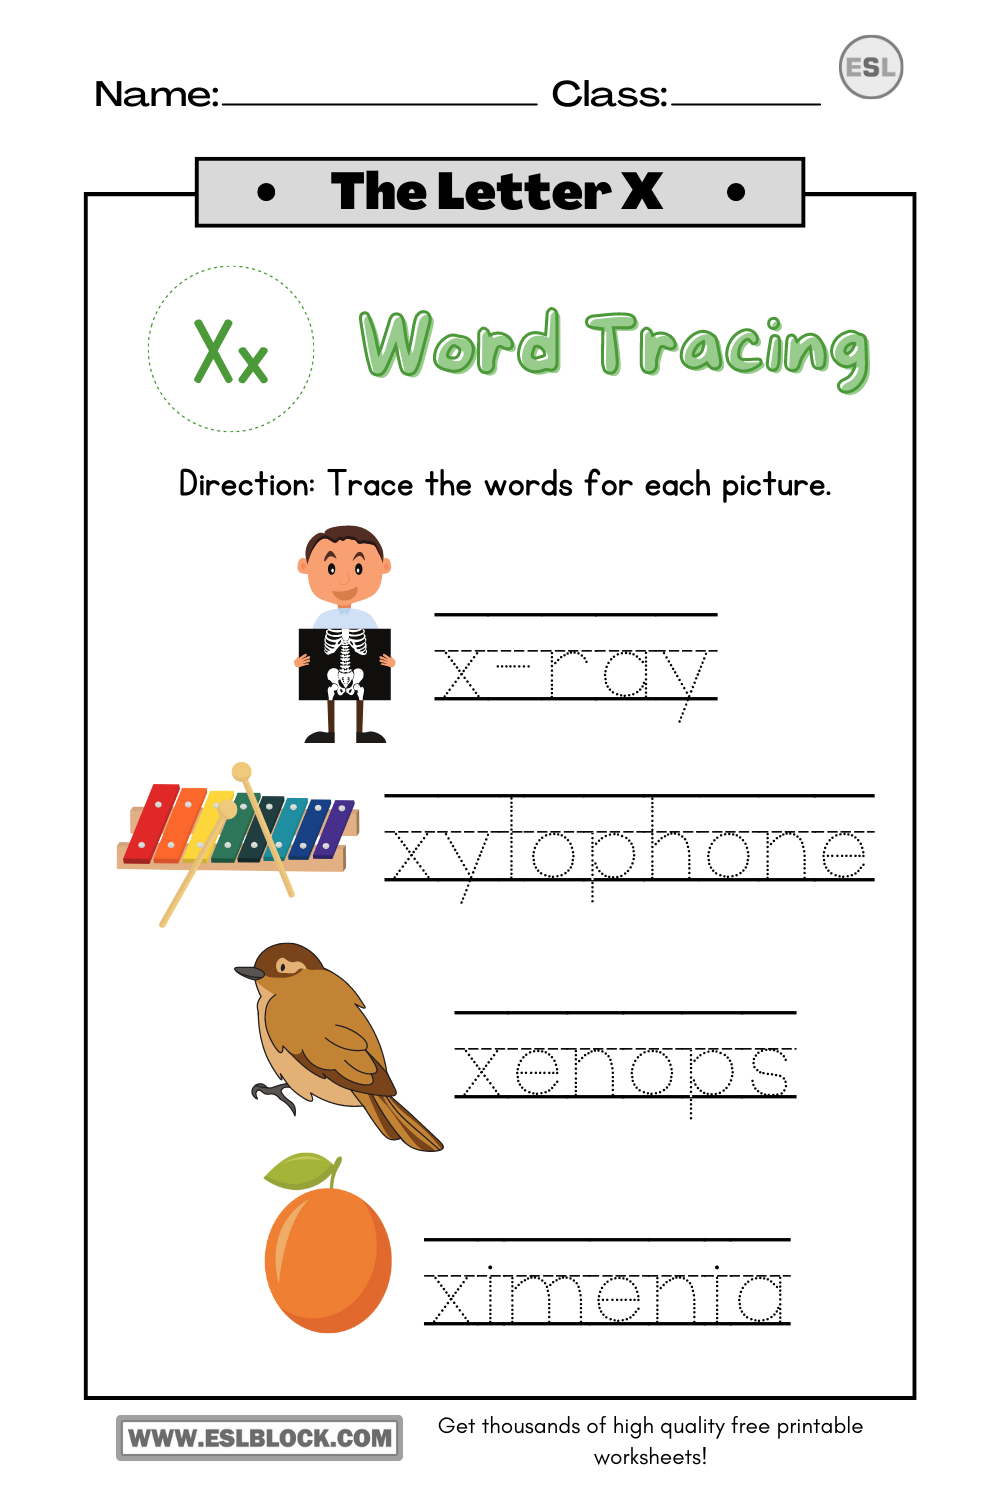 Alphabet X Printable Worksheets, Free Worksheets, Kindergarten Worksheets, Letter X Printable Worksheets, Preschool Worksheets, Tracing the Letter X, Tracing the letter X Printable, Tracing the Letter X Worksheets, Tracing Worksheets, Worksheets